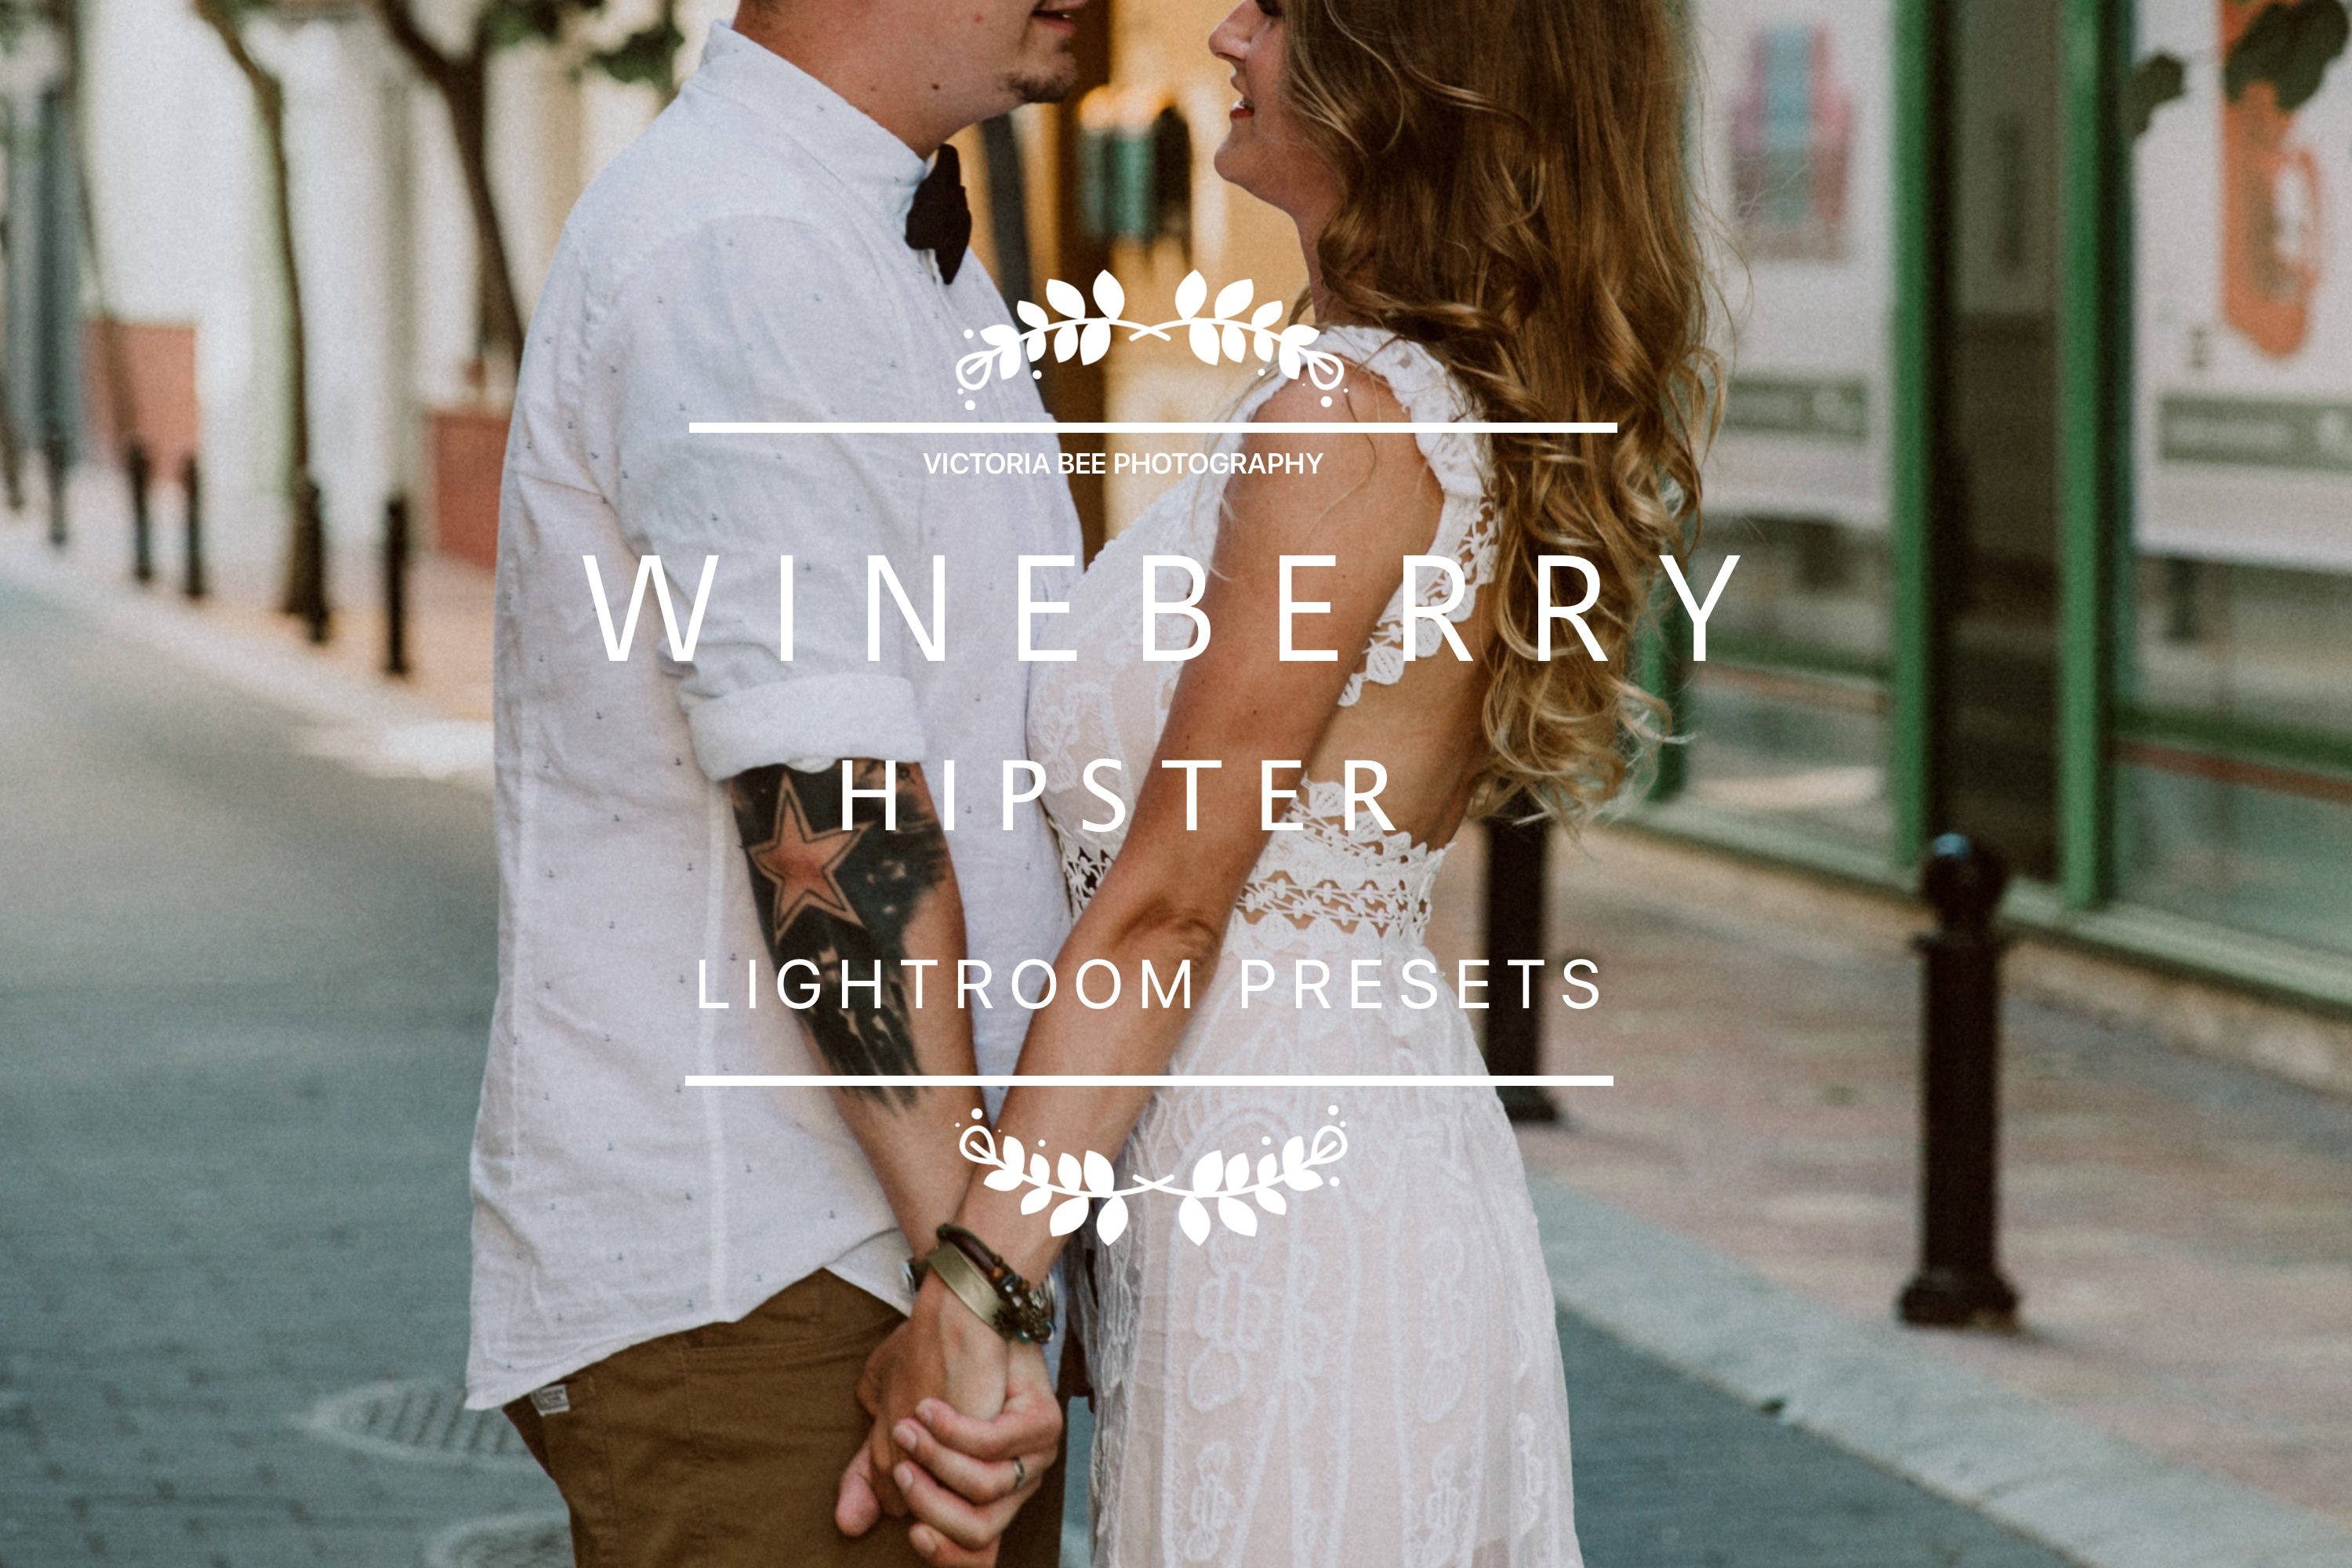 WINEBERRY Hipster Lightroom Preset 2340407